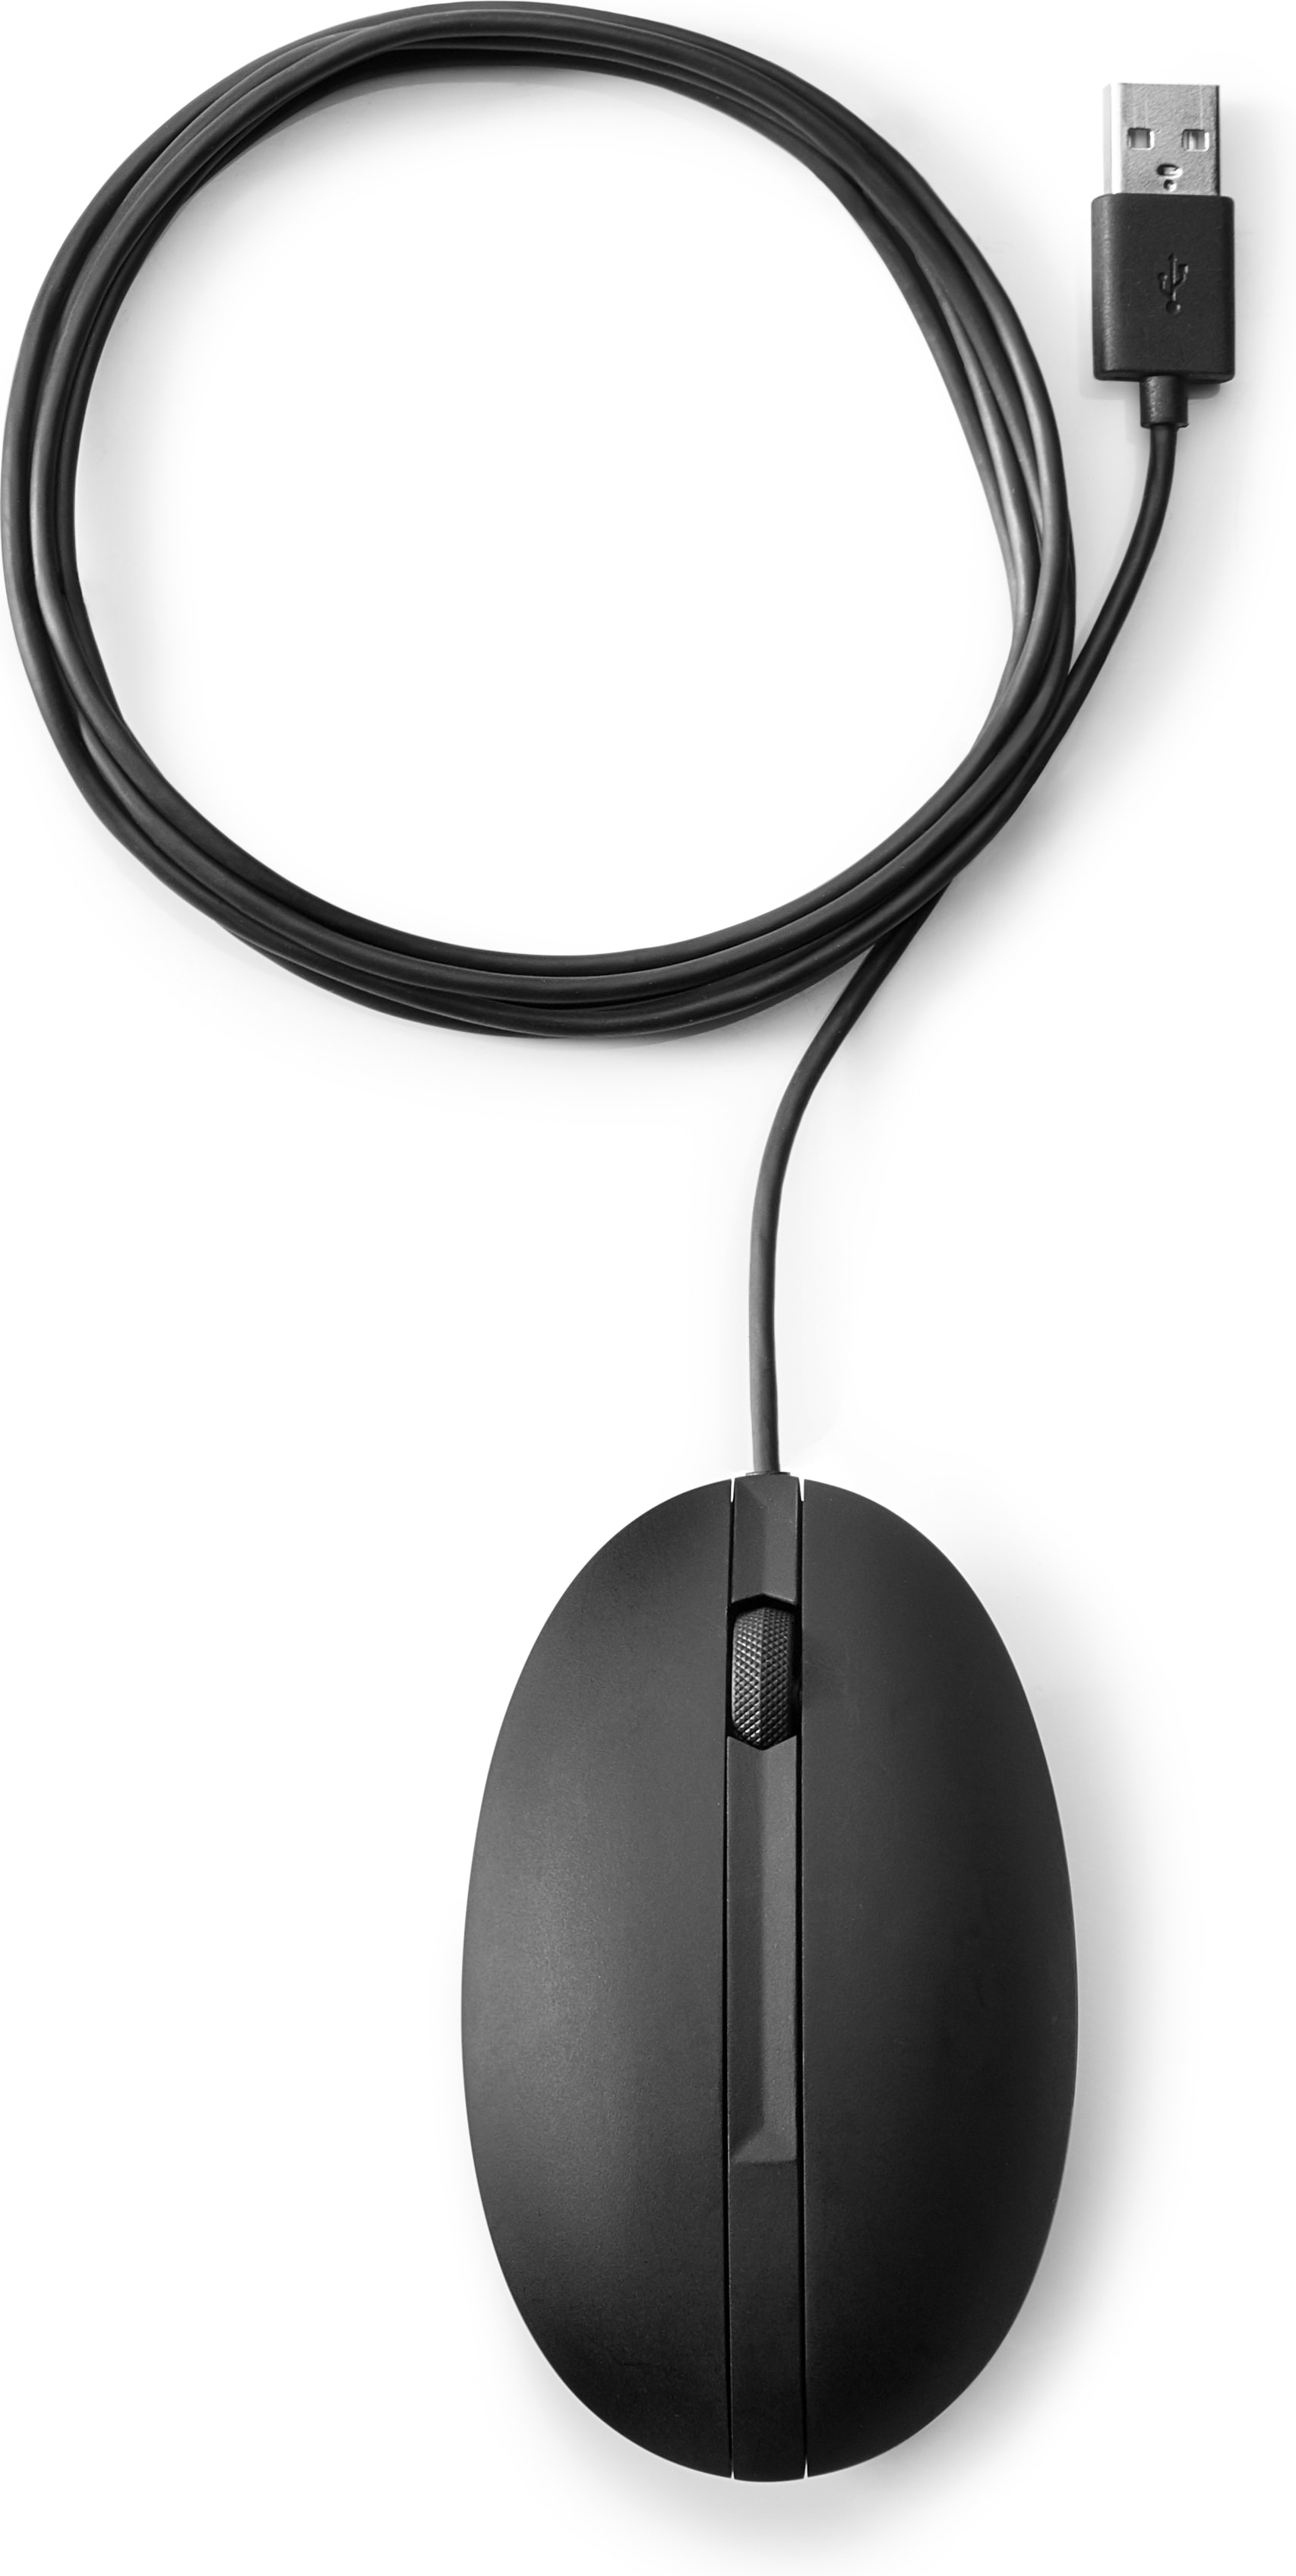 HP Desktop 320M - Maus - 3 Tasten - kabelgebunden